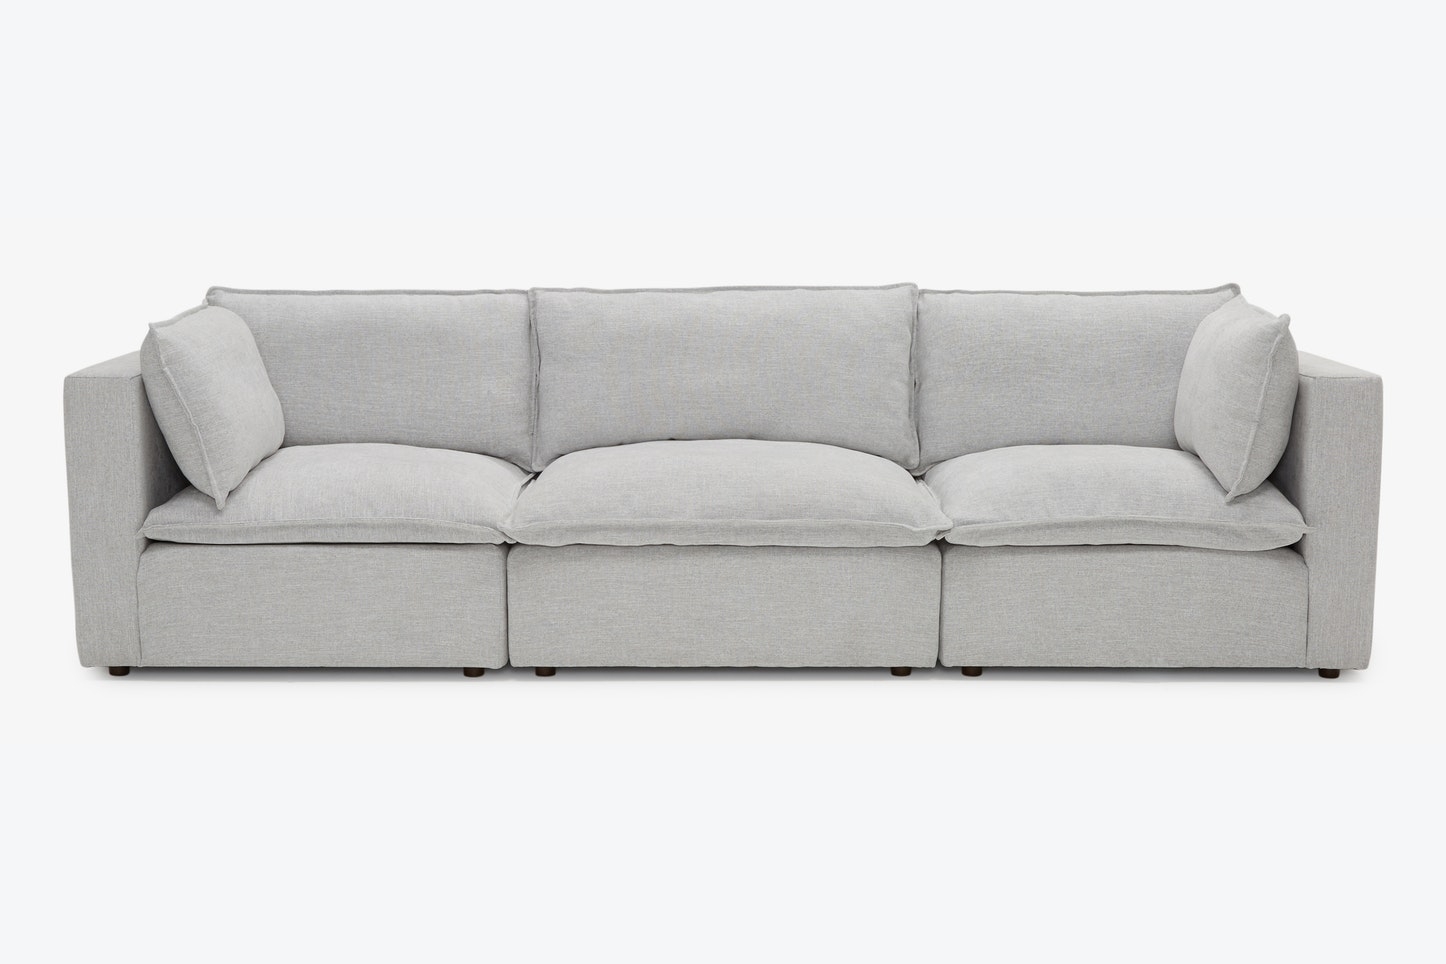 Haine Modular Sofa - Image 1